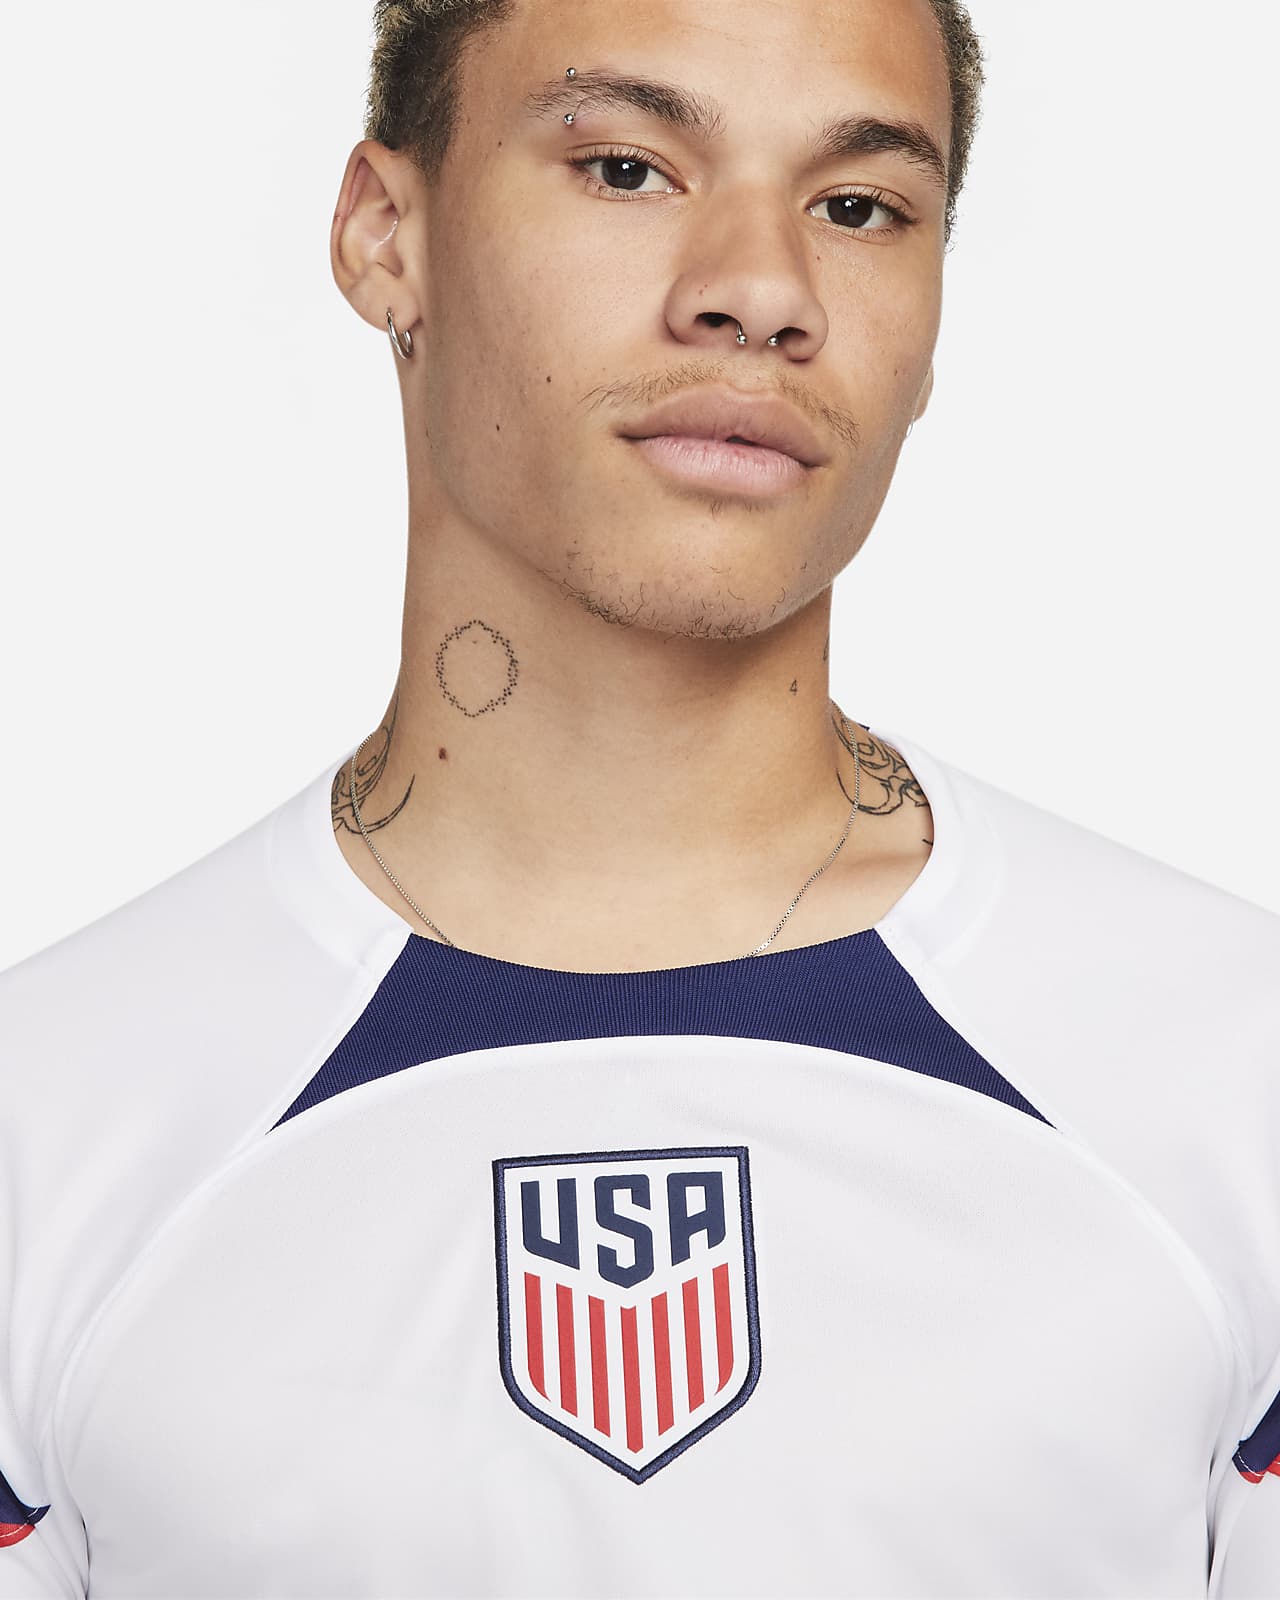 Men's Nike USA Dri-Fit States Baseball Jersey - Official U.S. Soccer Store